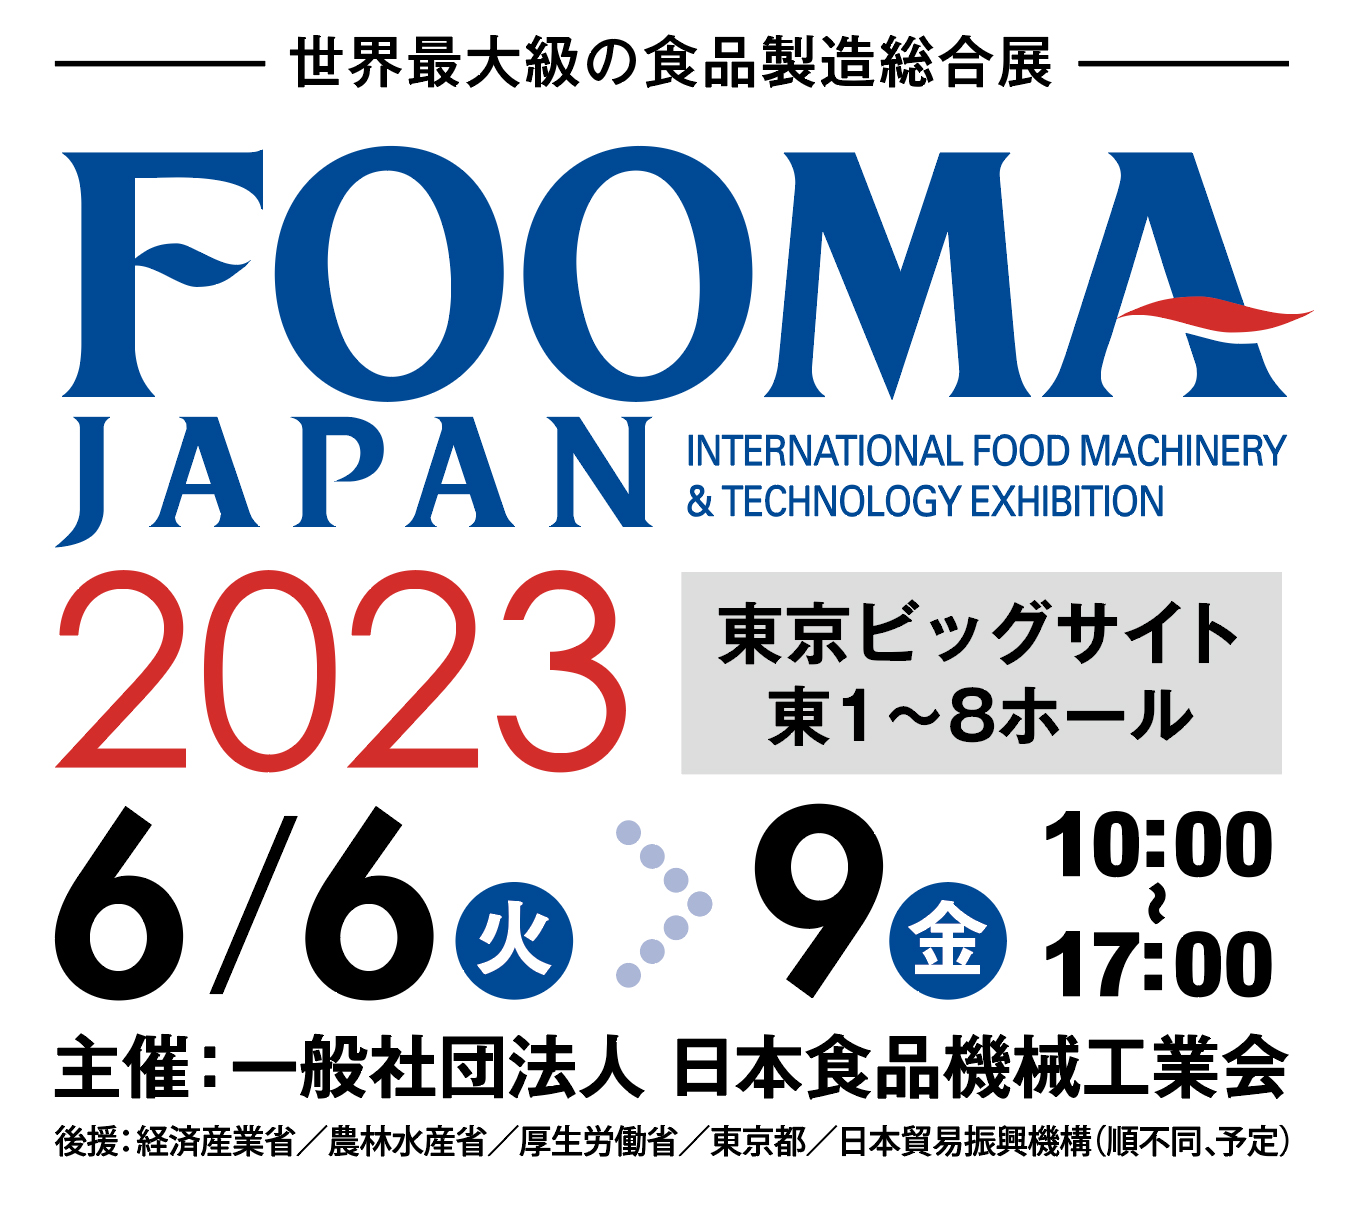 FOOMA JAPAN 2023 出展します